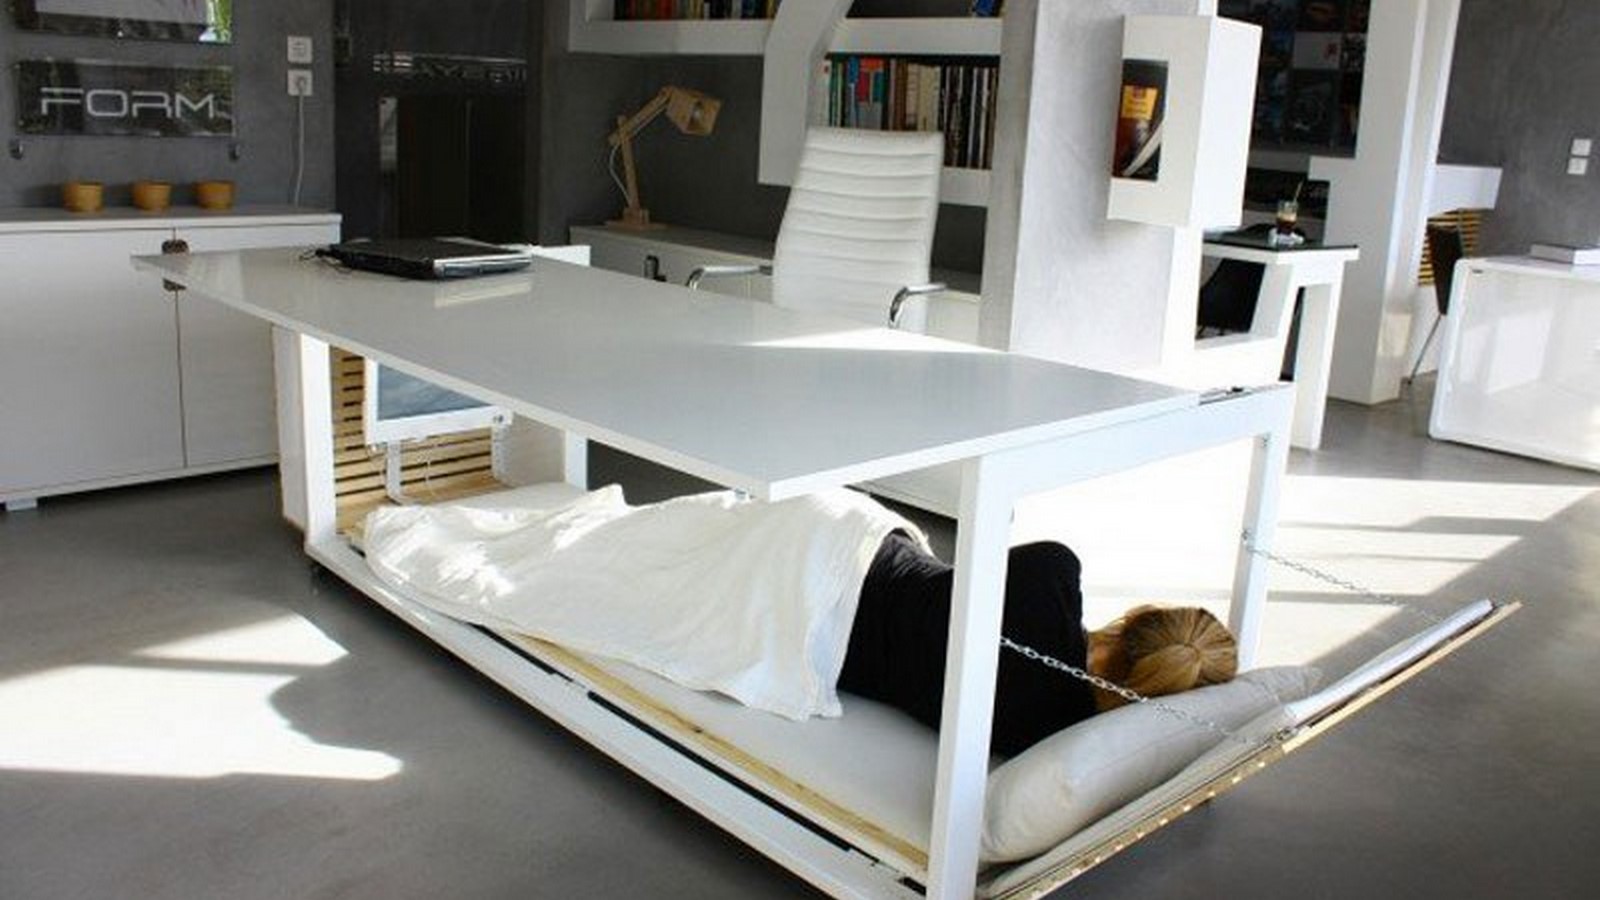 20 Futuristic Bedroom Interior Ideas Rtf Rethinking The Future